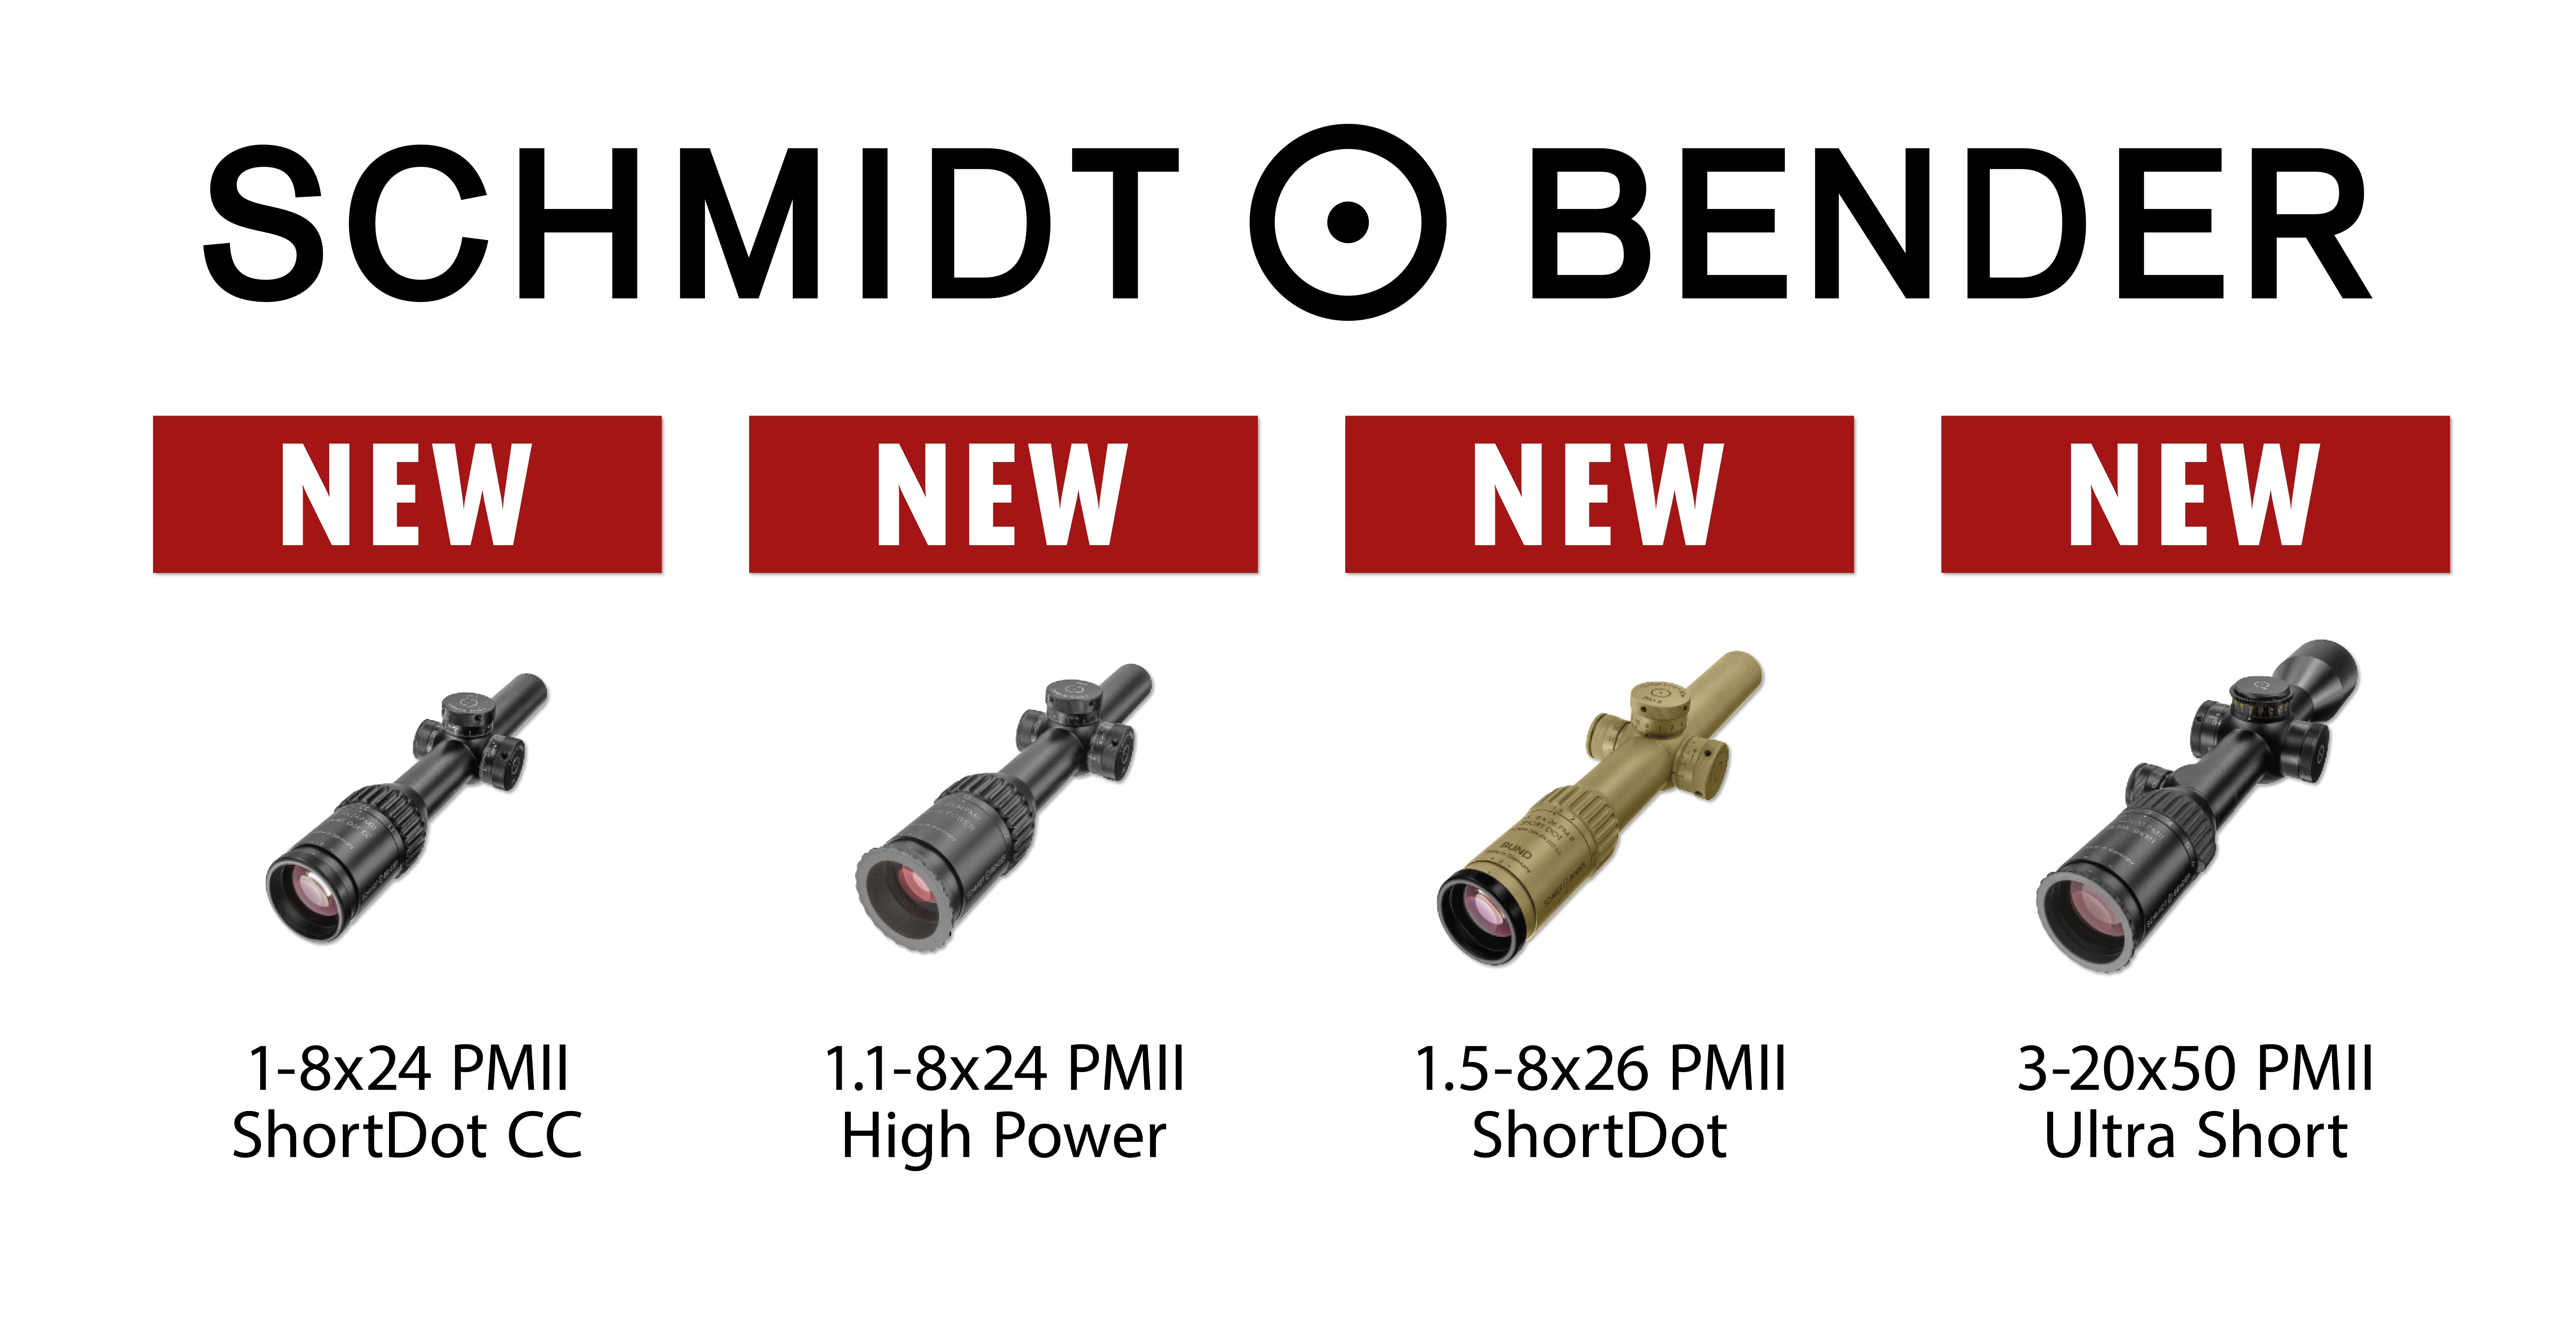 New products 2015 with 1-8x24 PM II ShortDot CC, 1.1-8x24 PM II High Power, 1.5-8x26 PM II ShortDot and 3-20x50 PM II Ultra Short